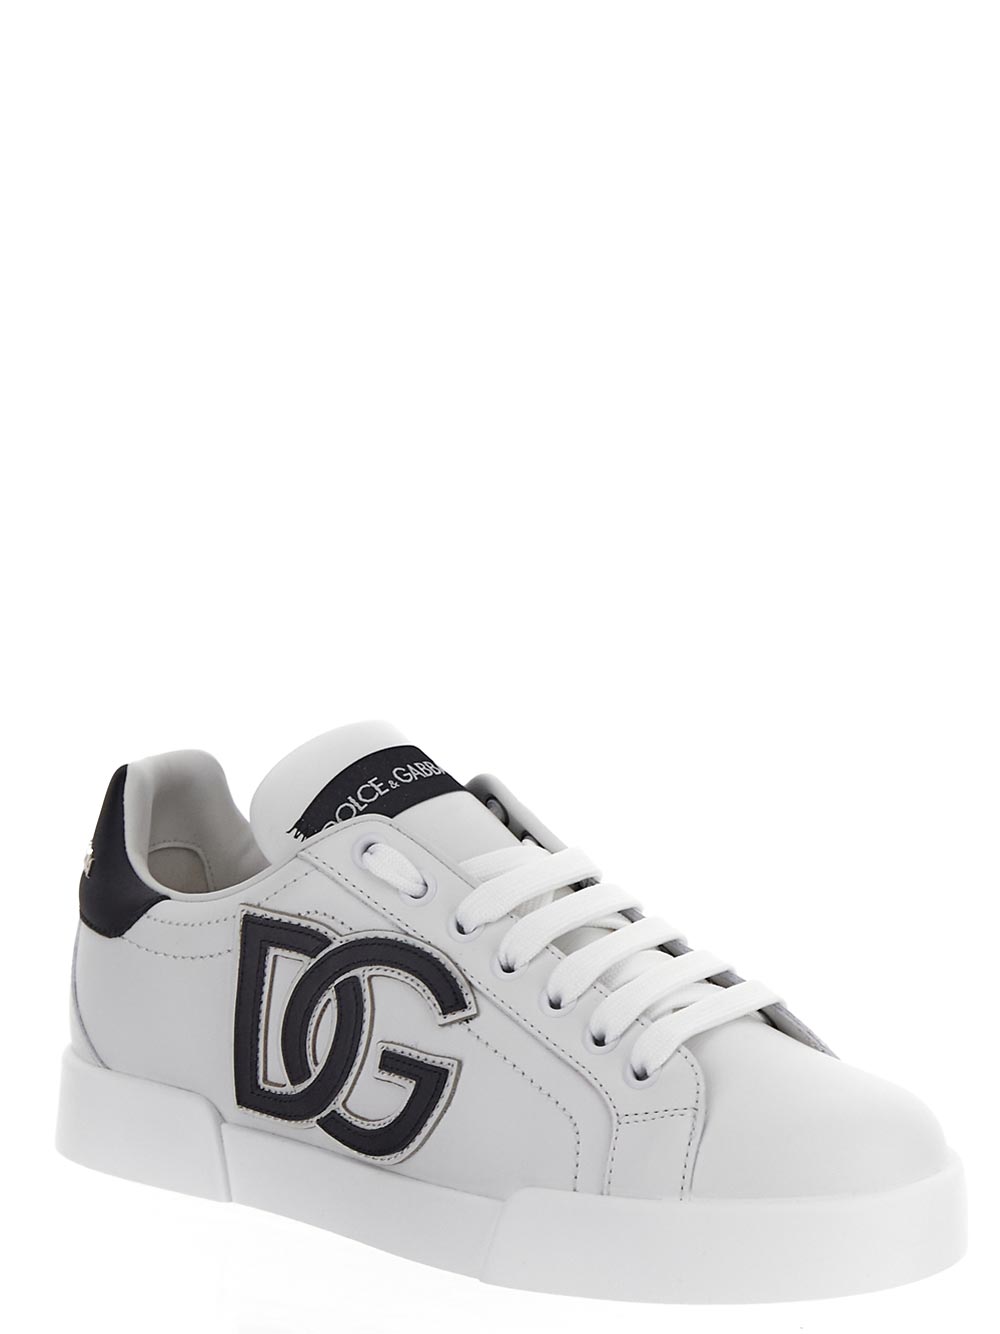 Dolce & Gabbana Calfskin Portofino Sneakers With Dg Logo